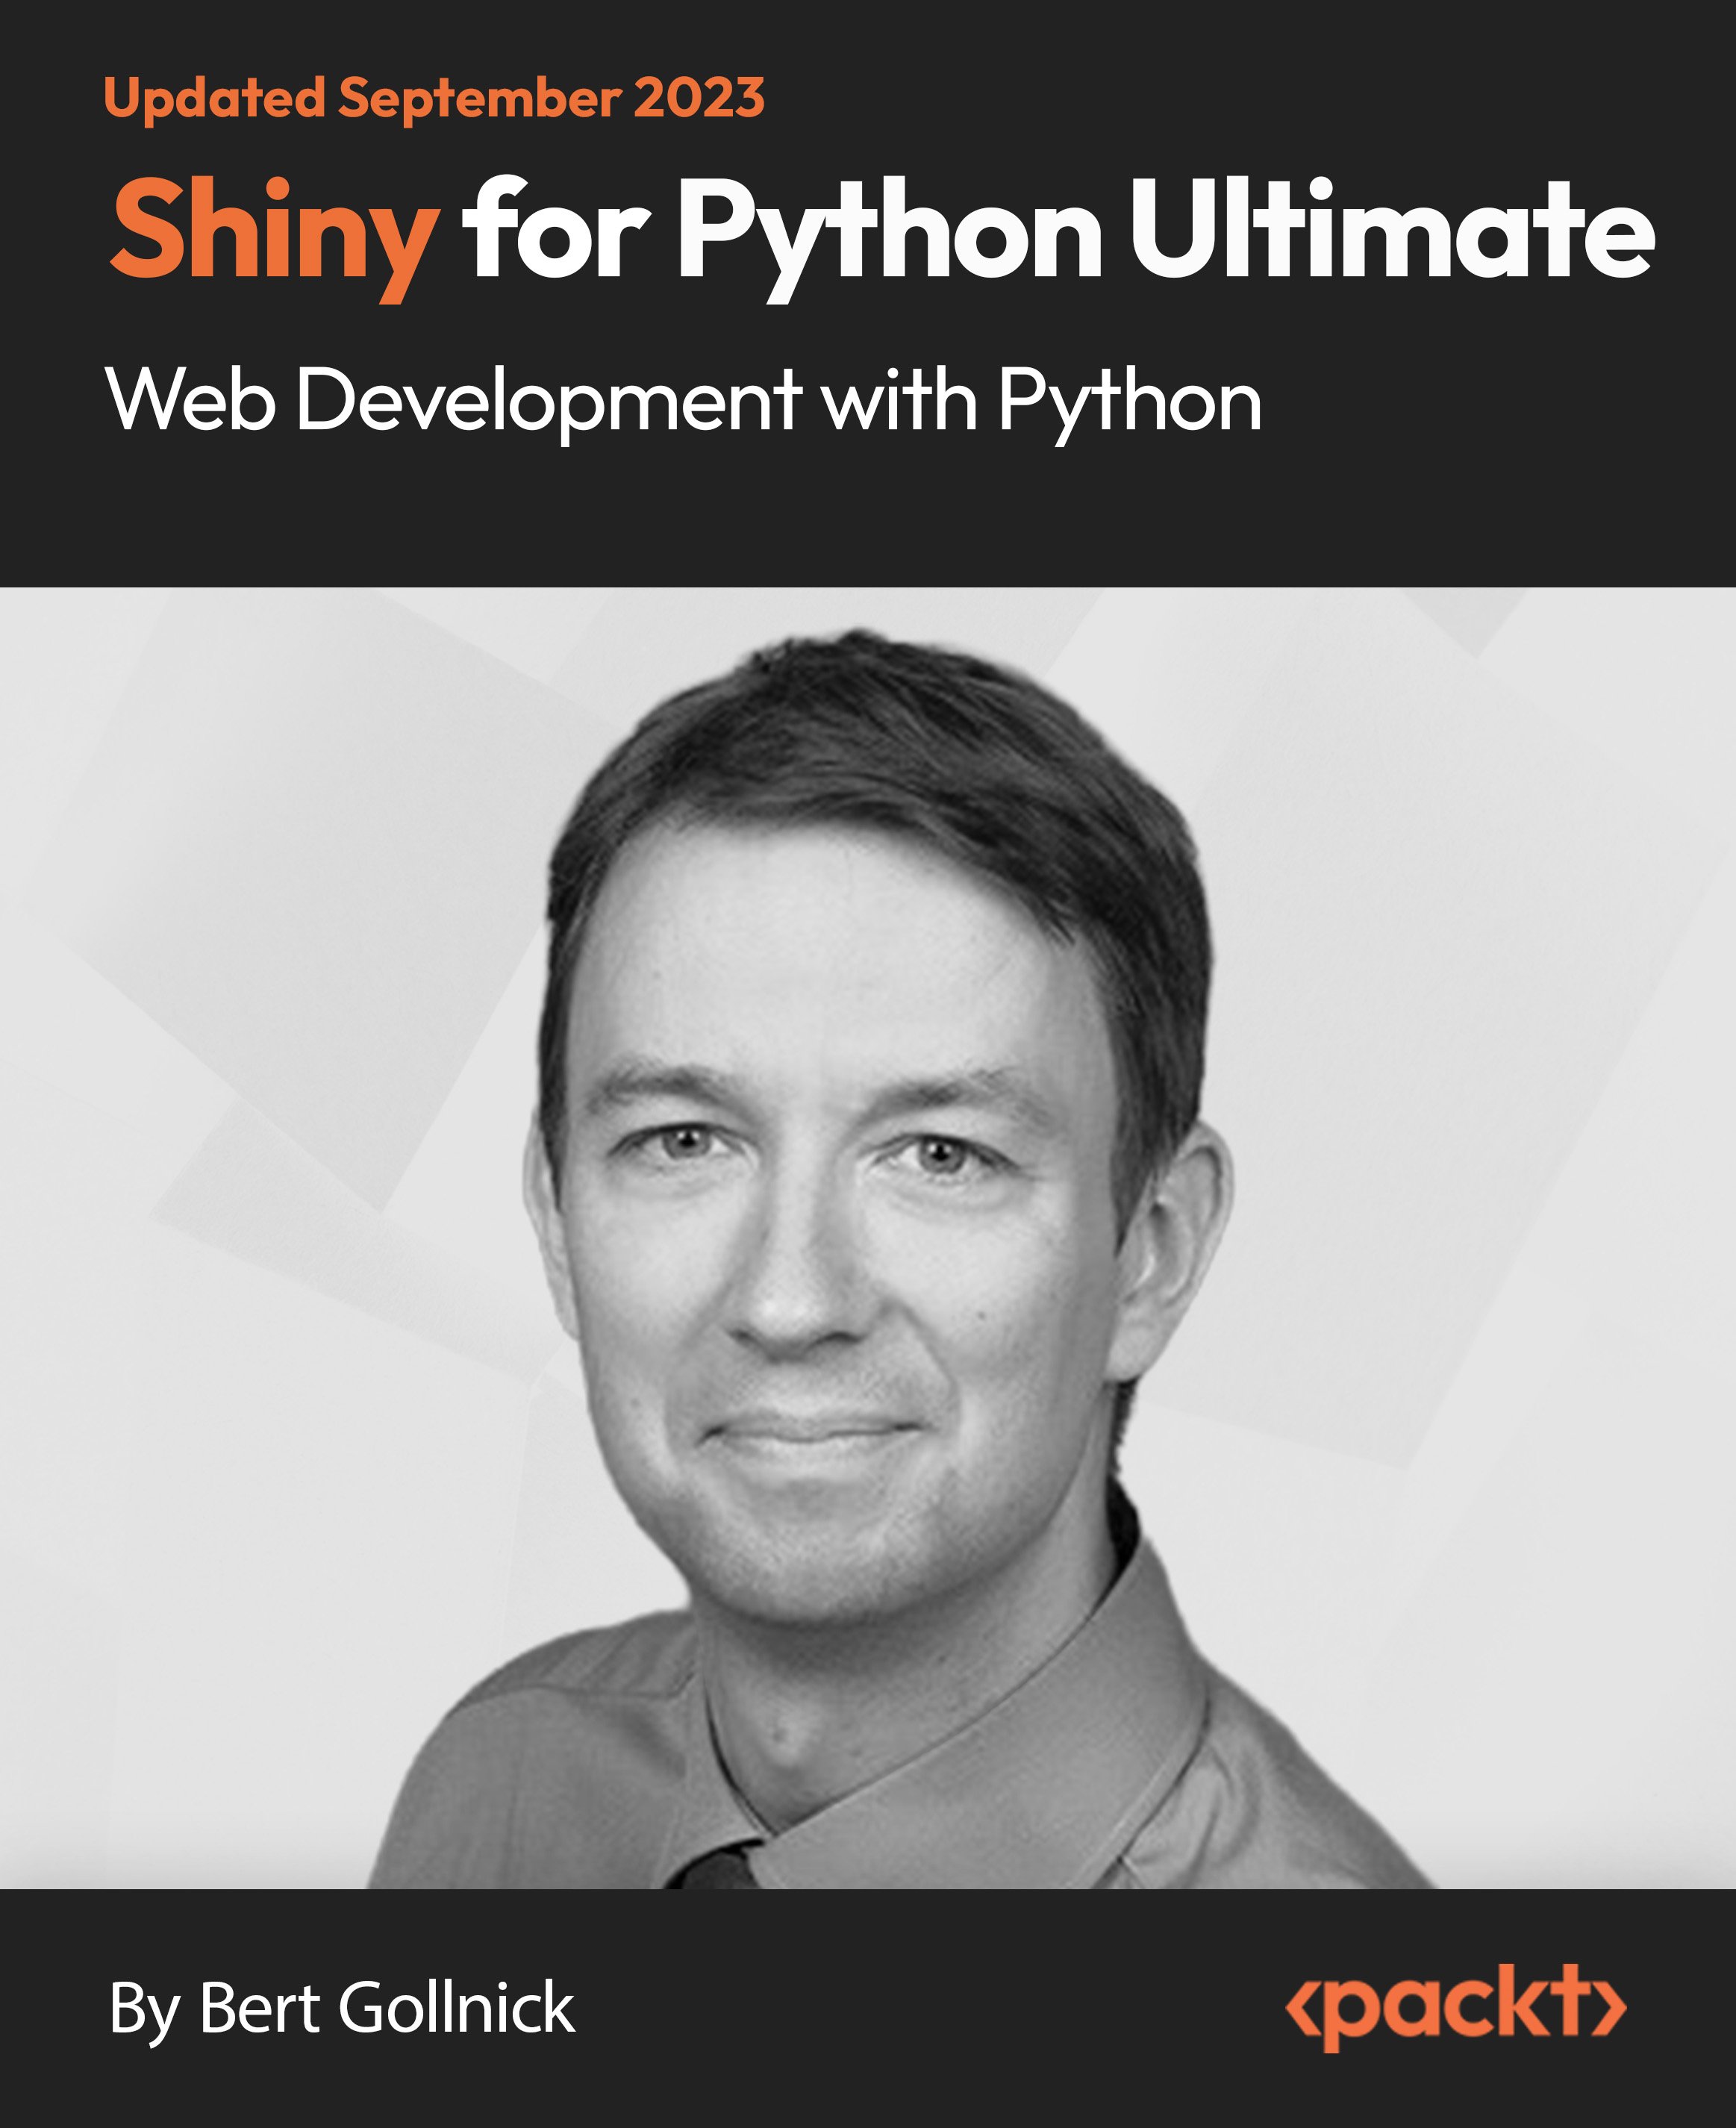 Shiny for Python Ultimate - Web Development with Python